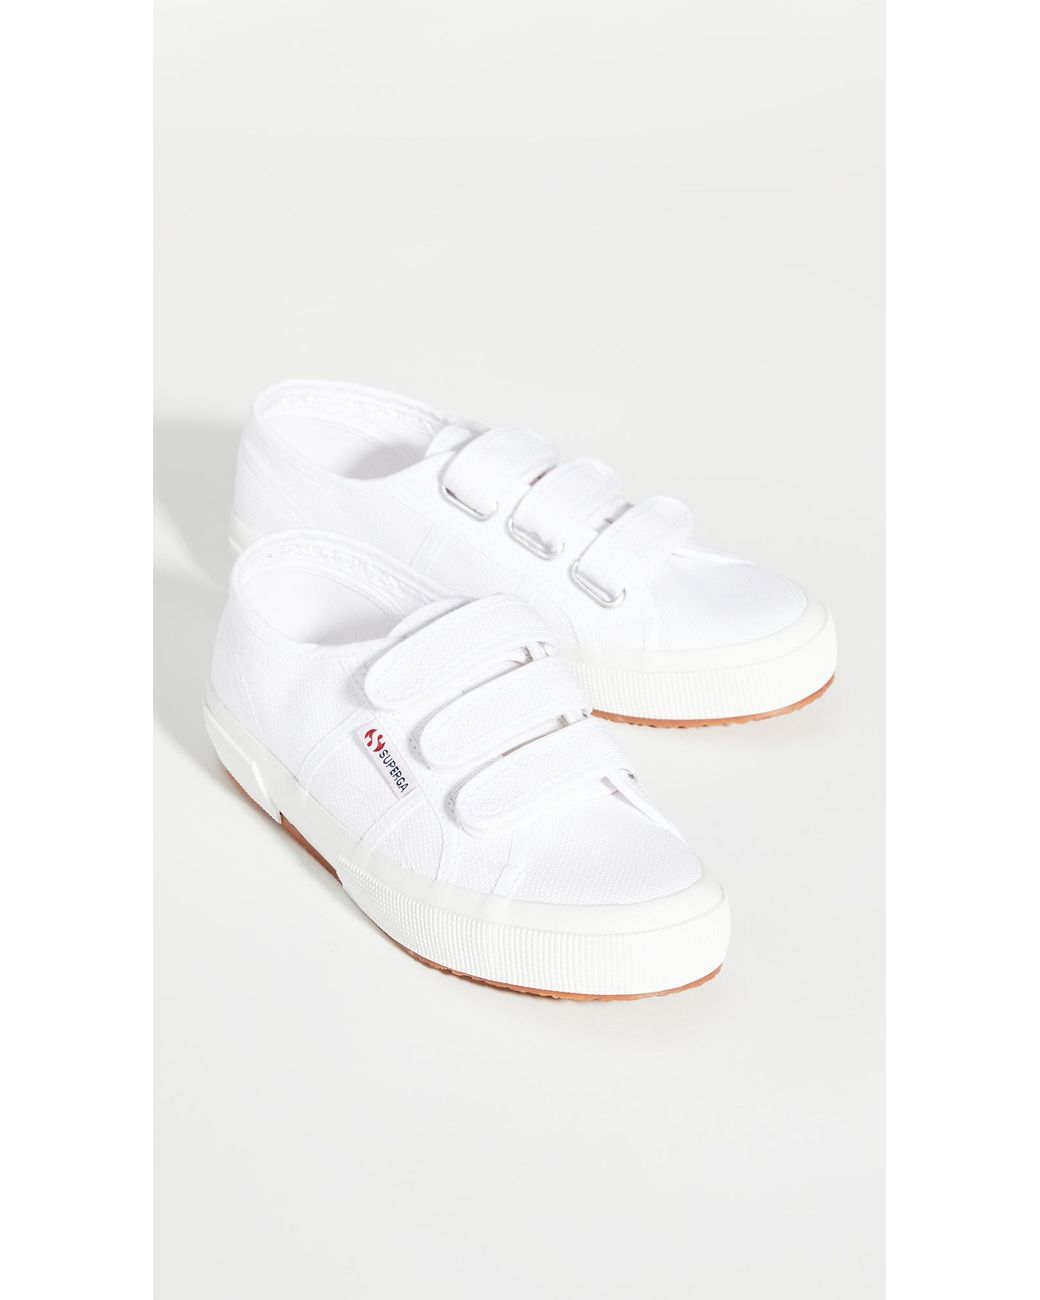 Superga 2750 Velcro Sneakers in White | Lyst Canada